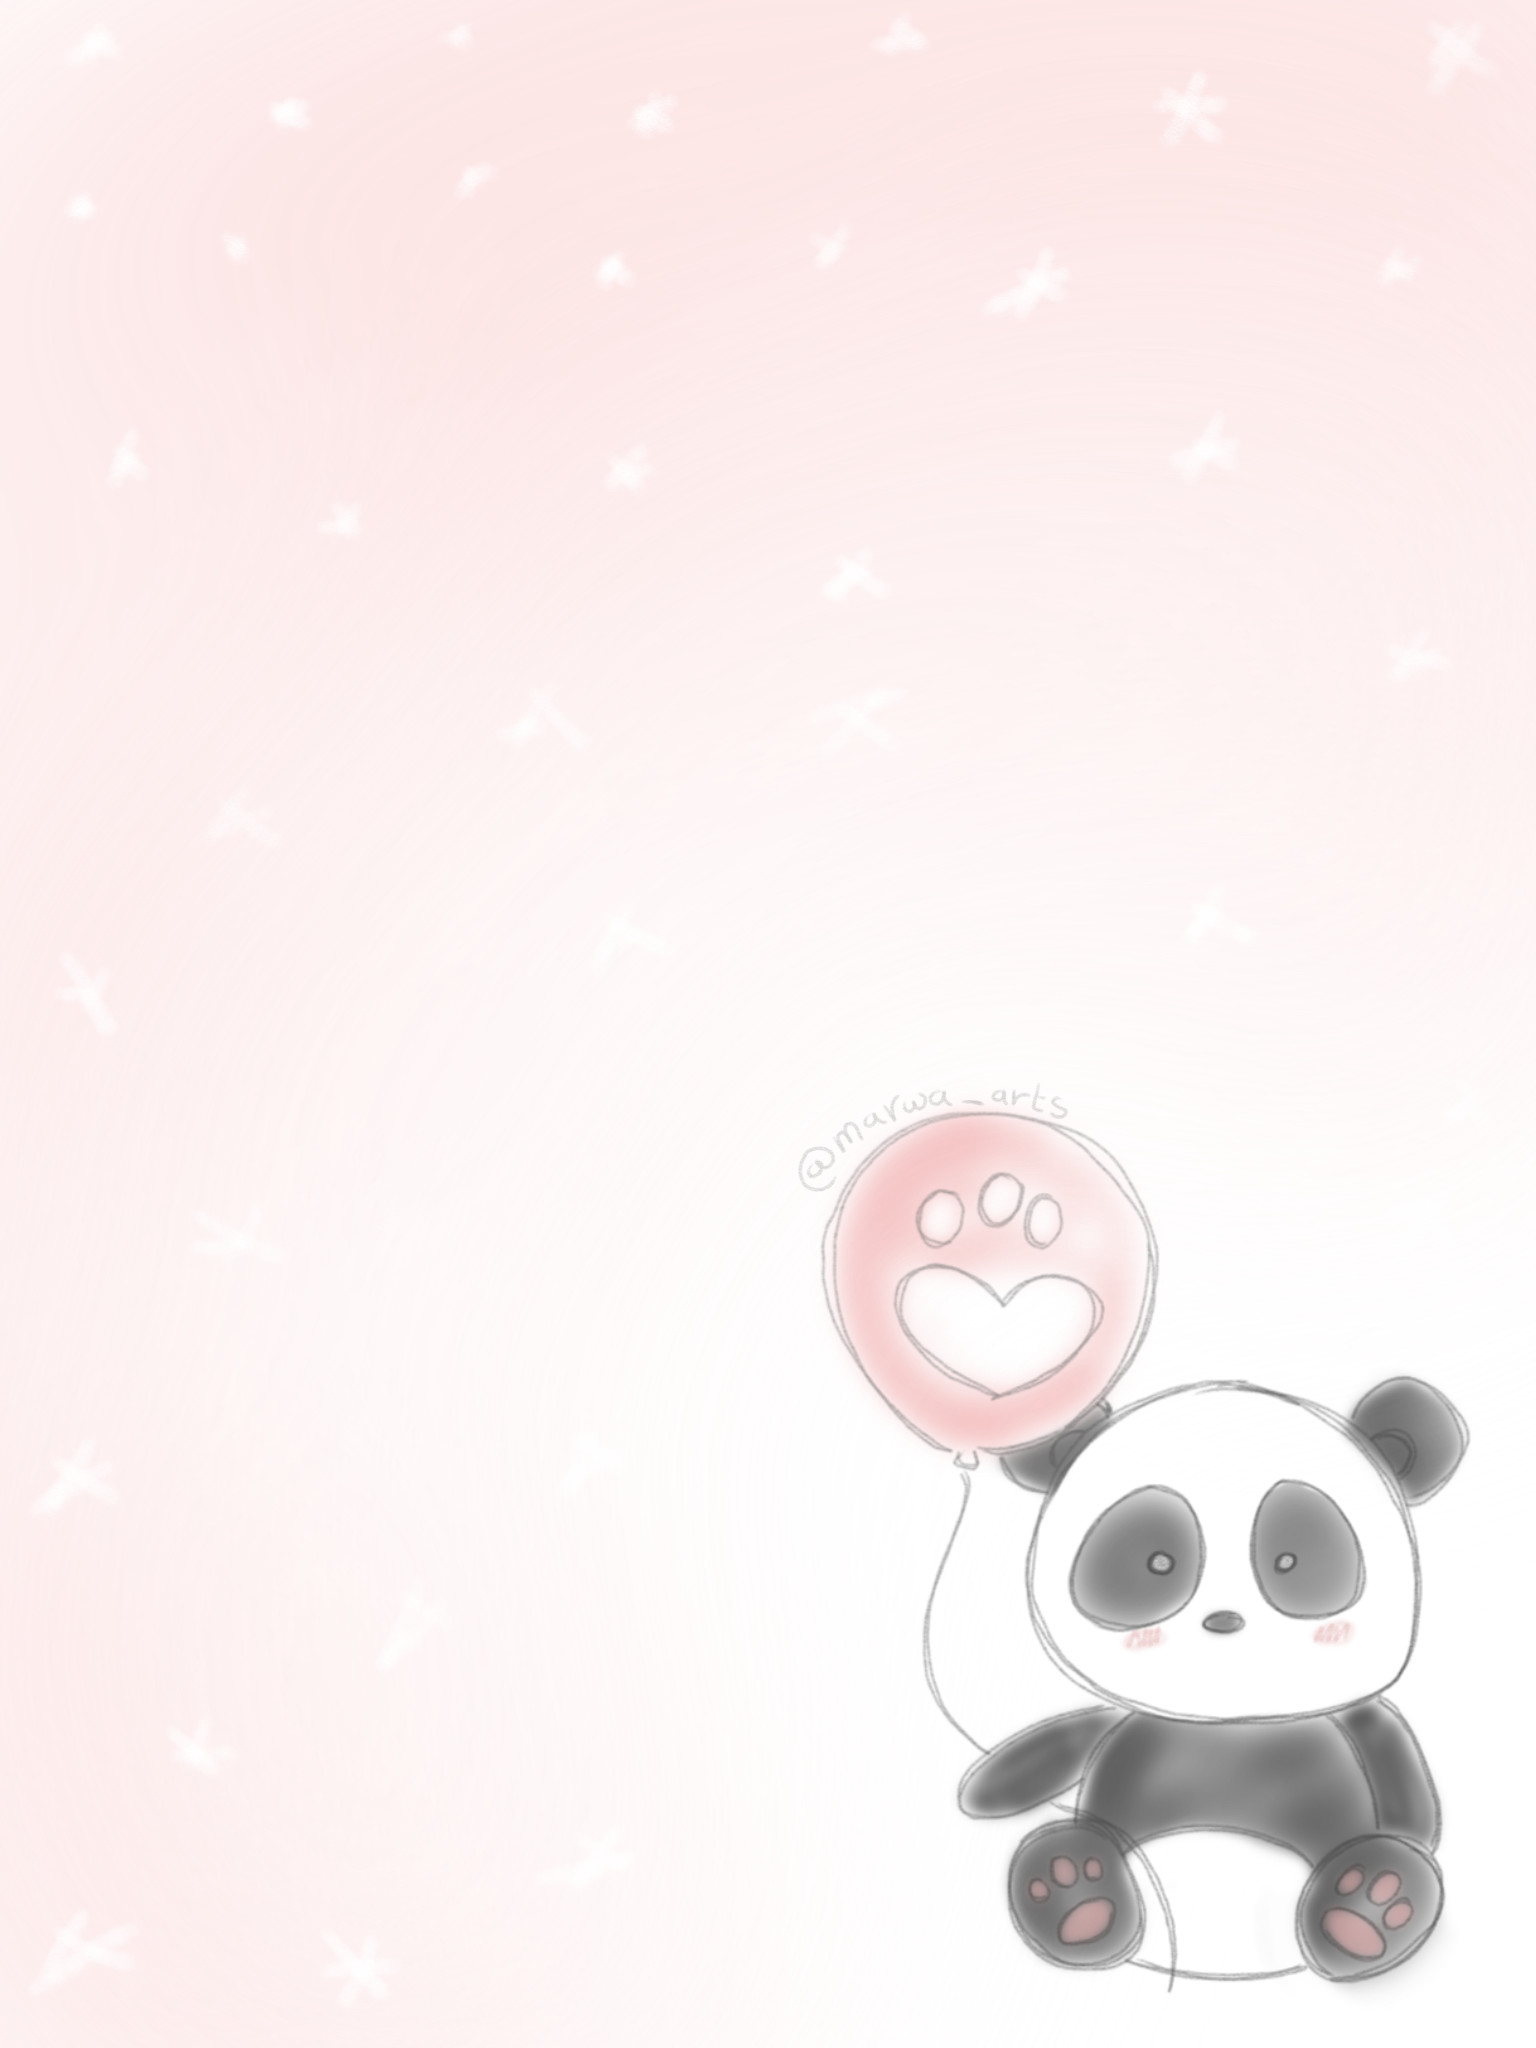 Download 66 Gambar Wallpaper Panda Pink Paling Baru Gratis